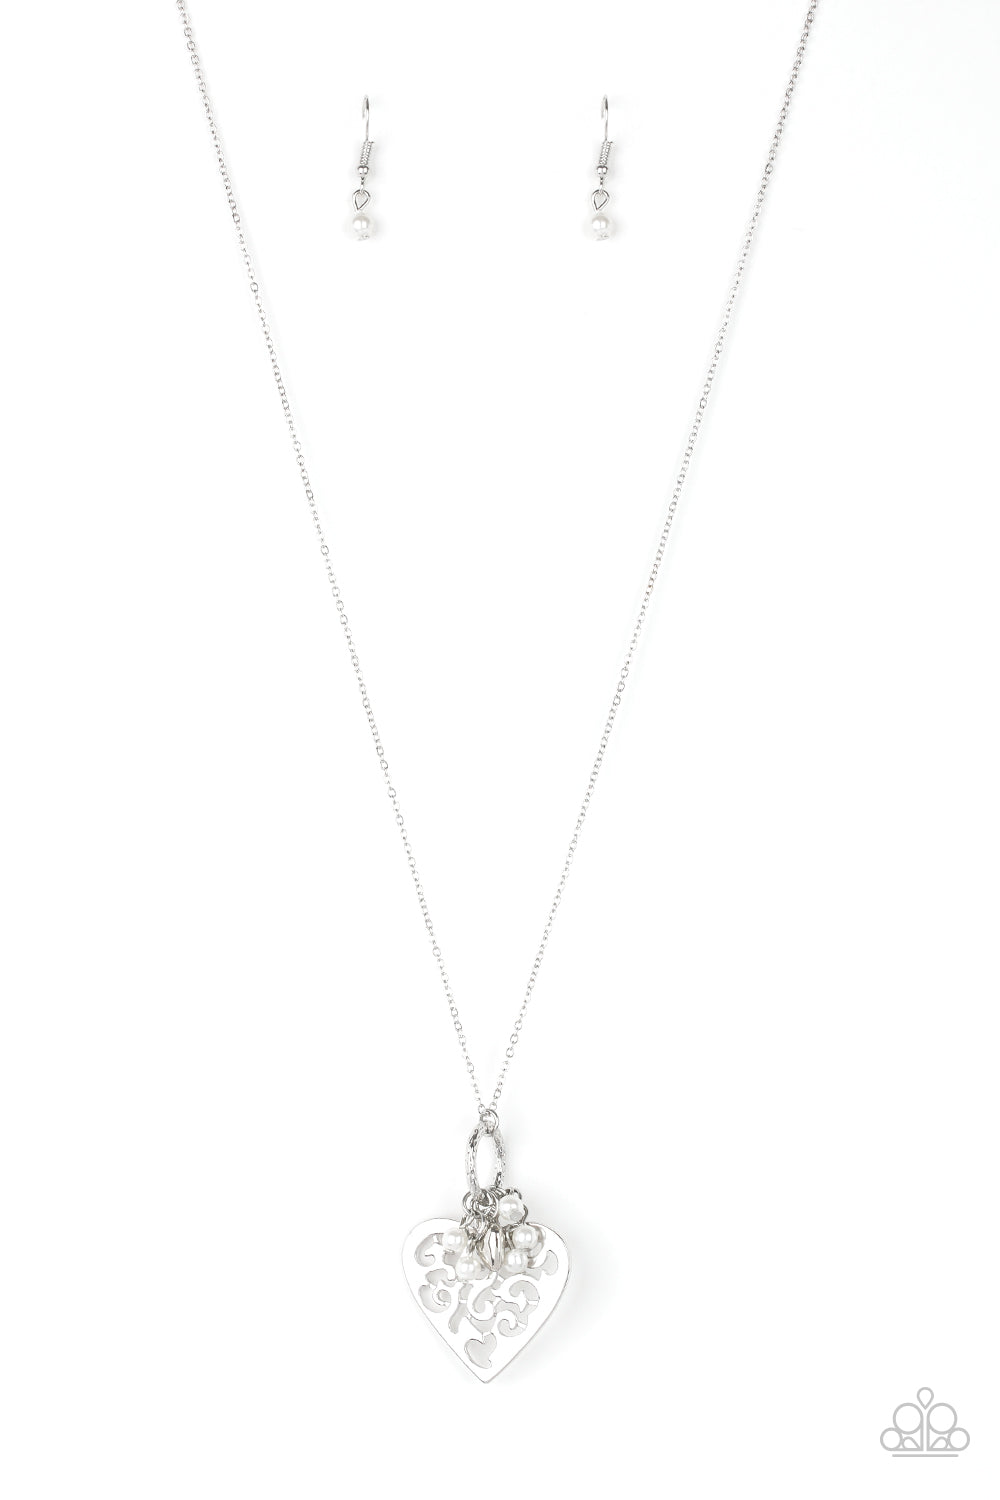 Romeo Romance White Pearl Necklace freeshipping - JewLz4u Gemstone Gallery